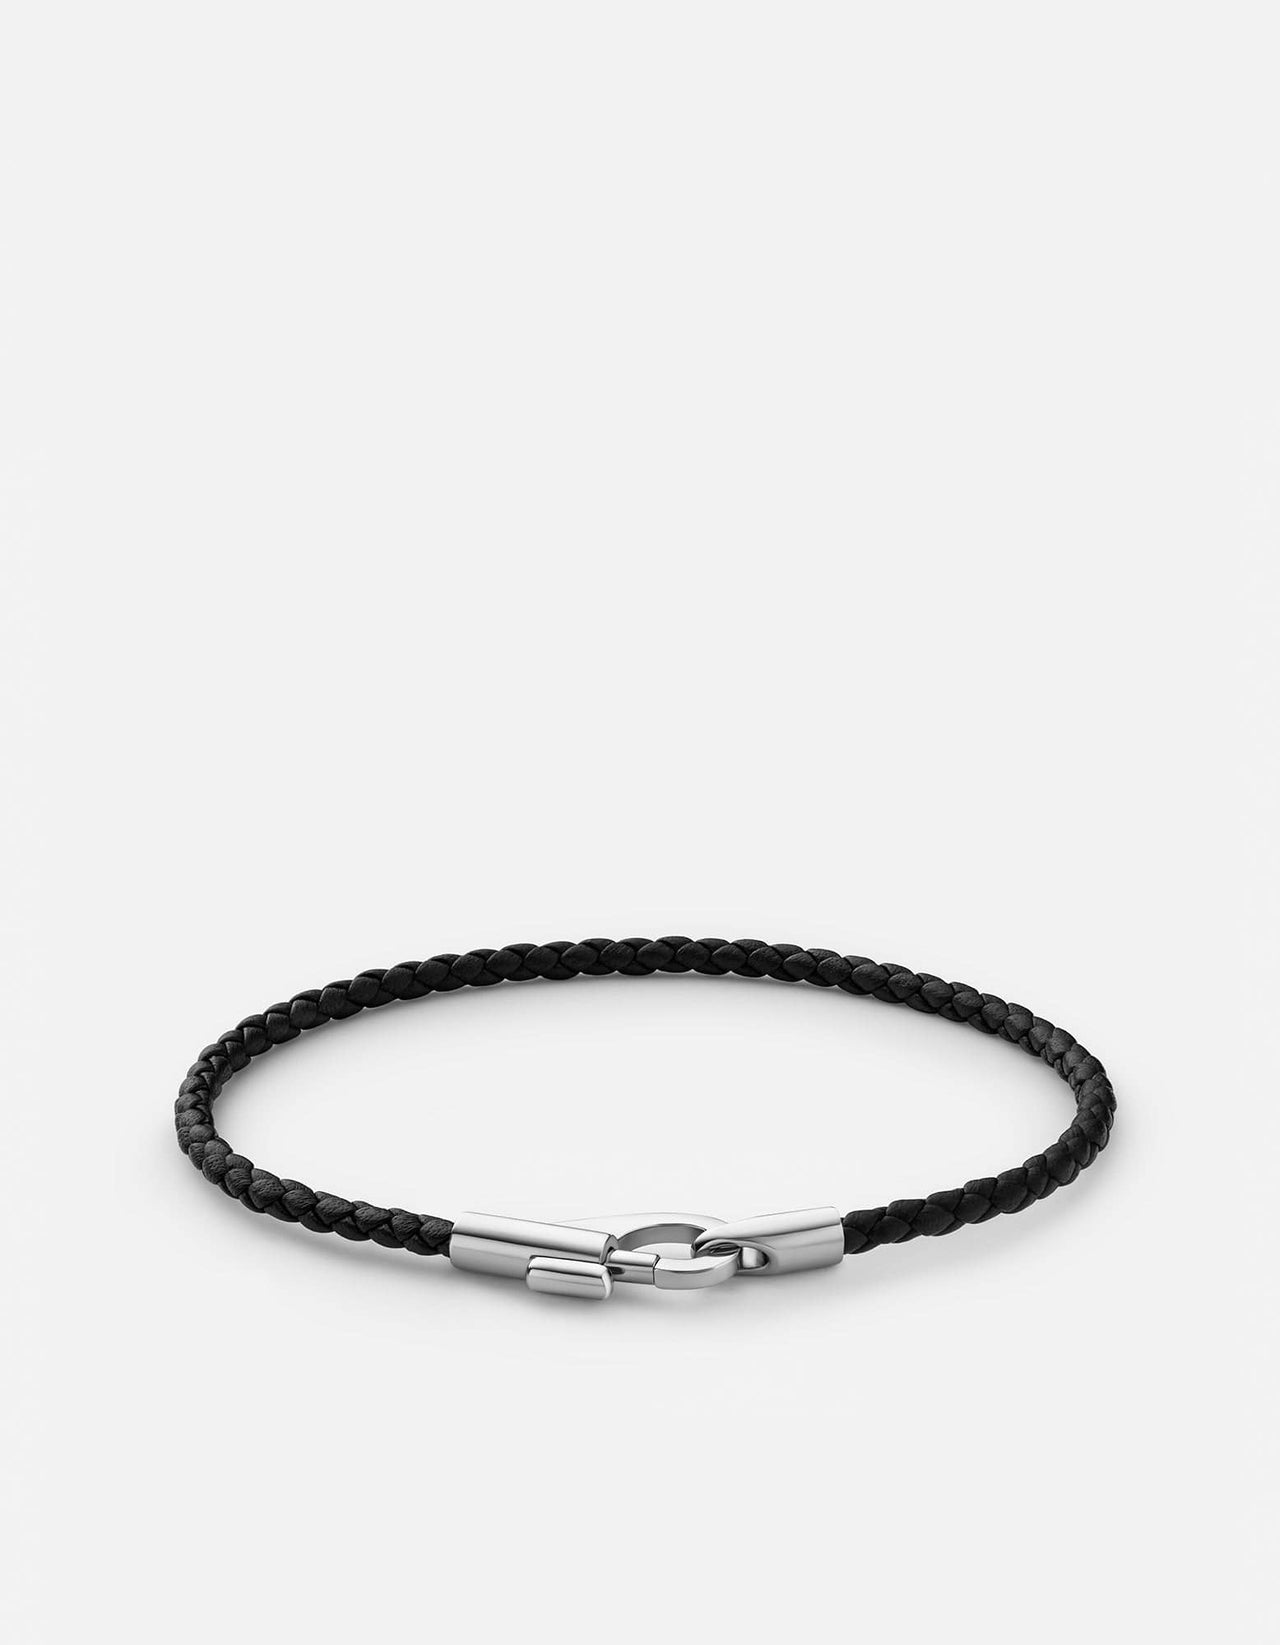 Miansai Men's Snap Leather Bracelet, Sterling Silver, Size S